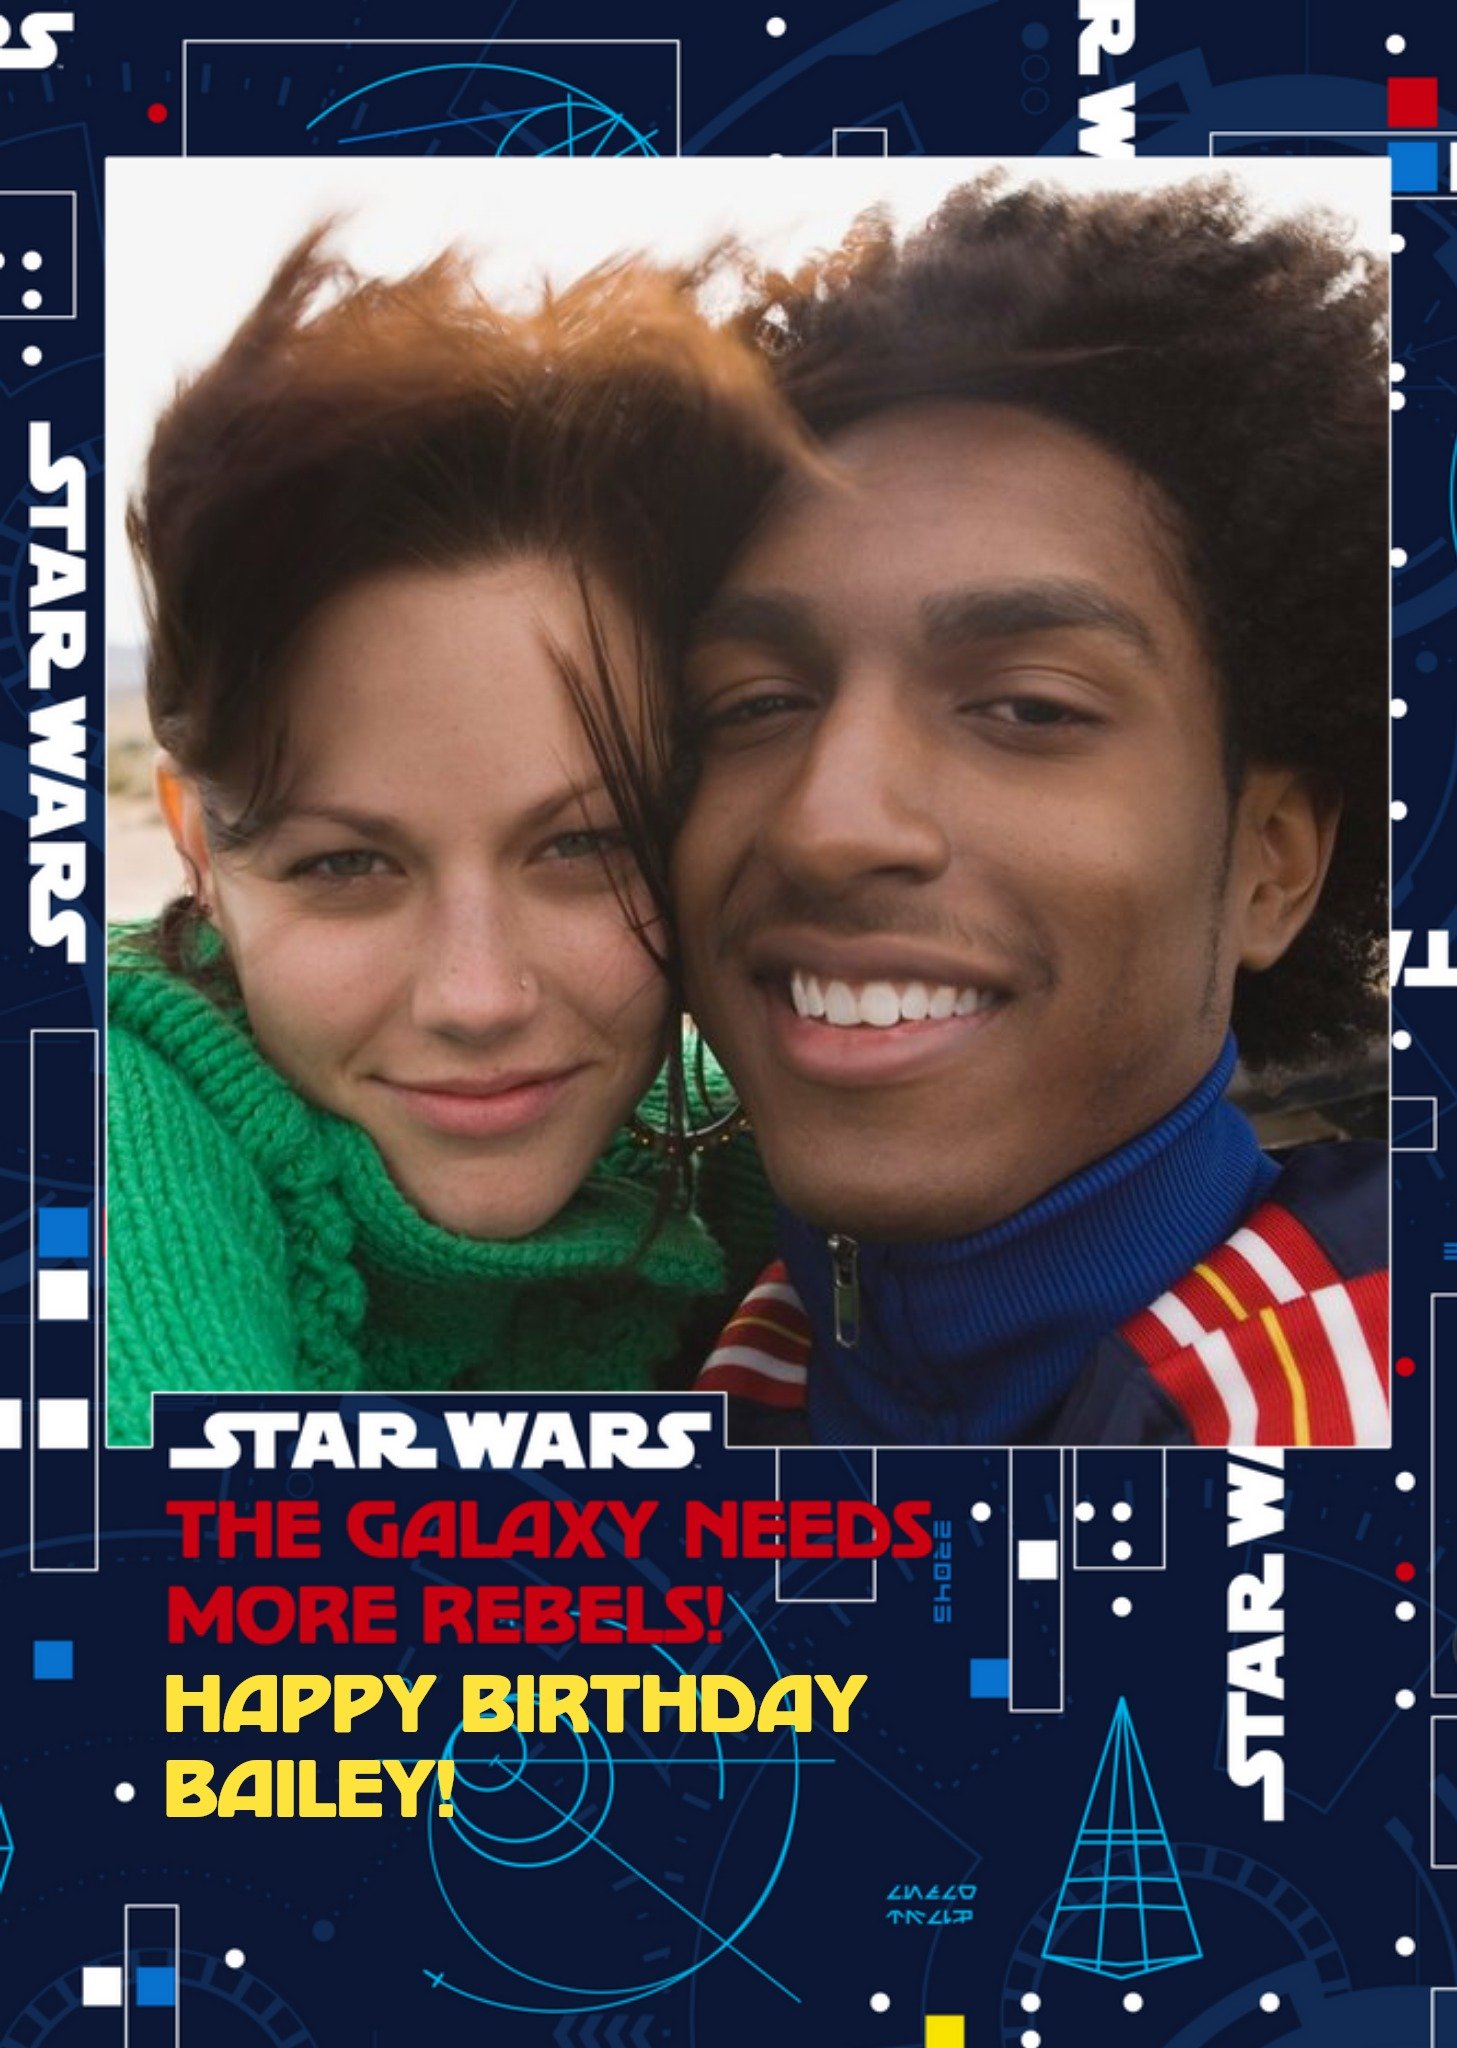 Disney Star Wars Episode 9 The Rise Of Skywalker Rebels Personalised Photo Upload Birthday Card Ecar